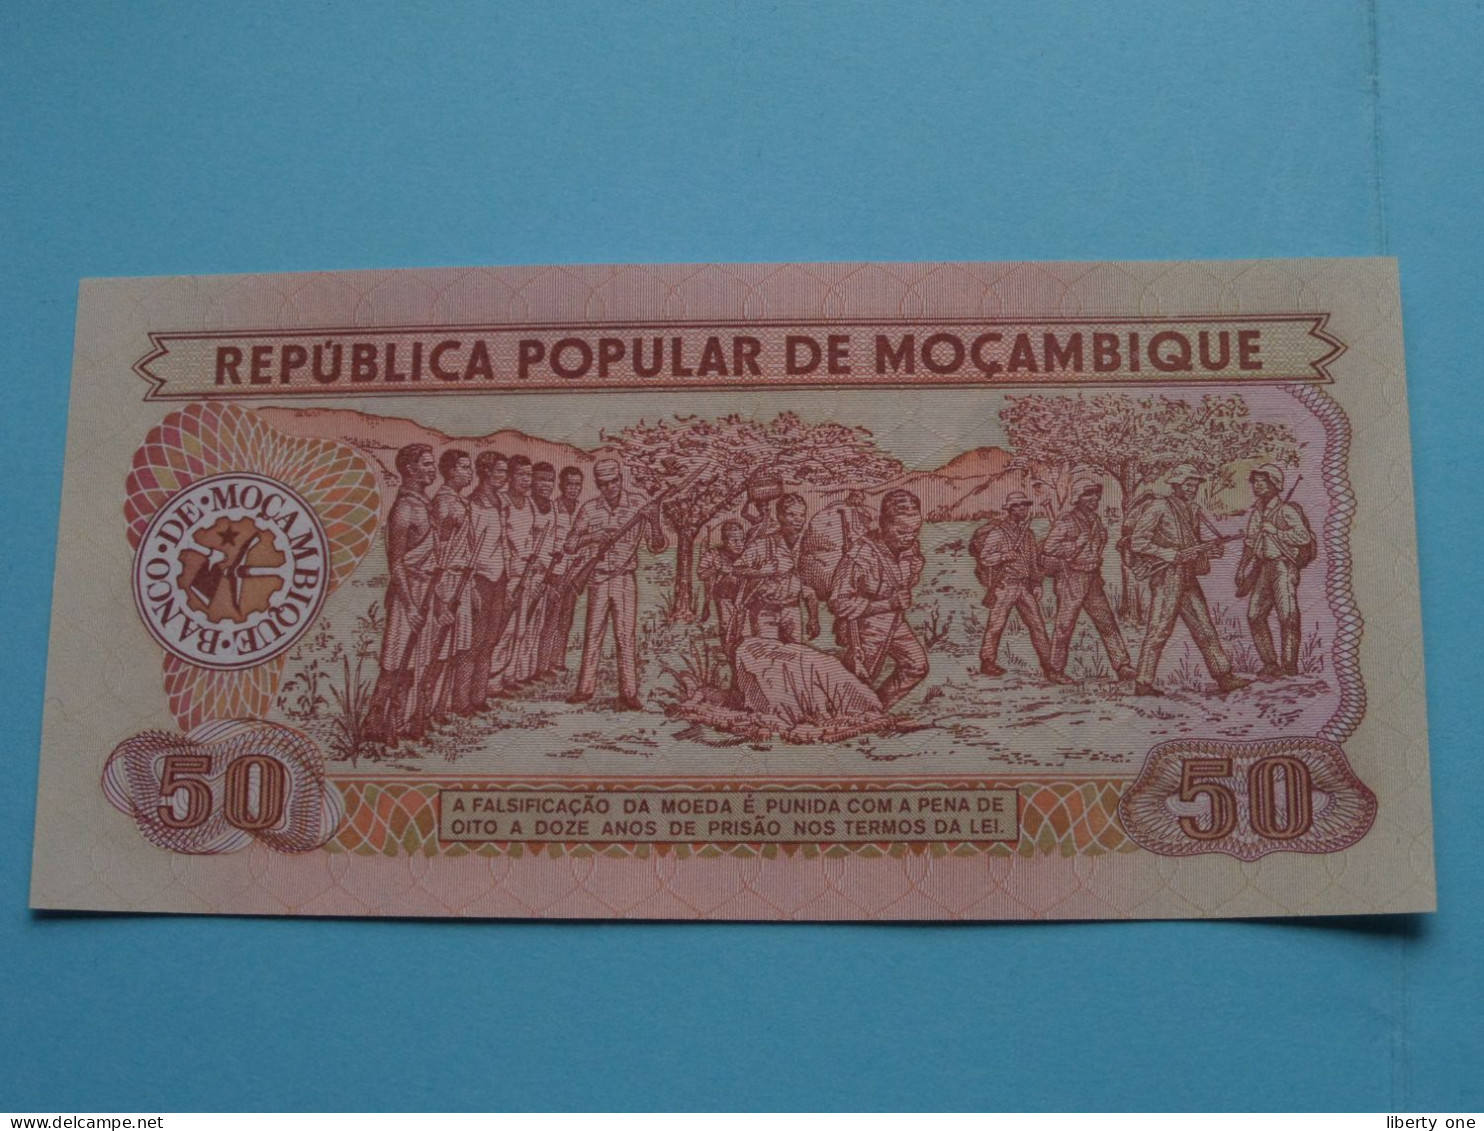 50 Cinquenta Meticais ( AK2812227 ) 1986 - Republica Popular De Mocambique ( For Grade, Please See Photo ) UNC ! - Mozambique